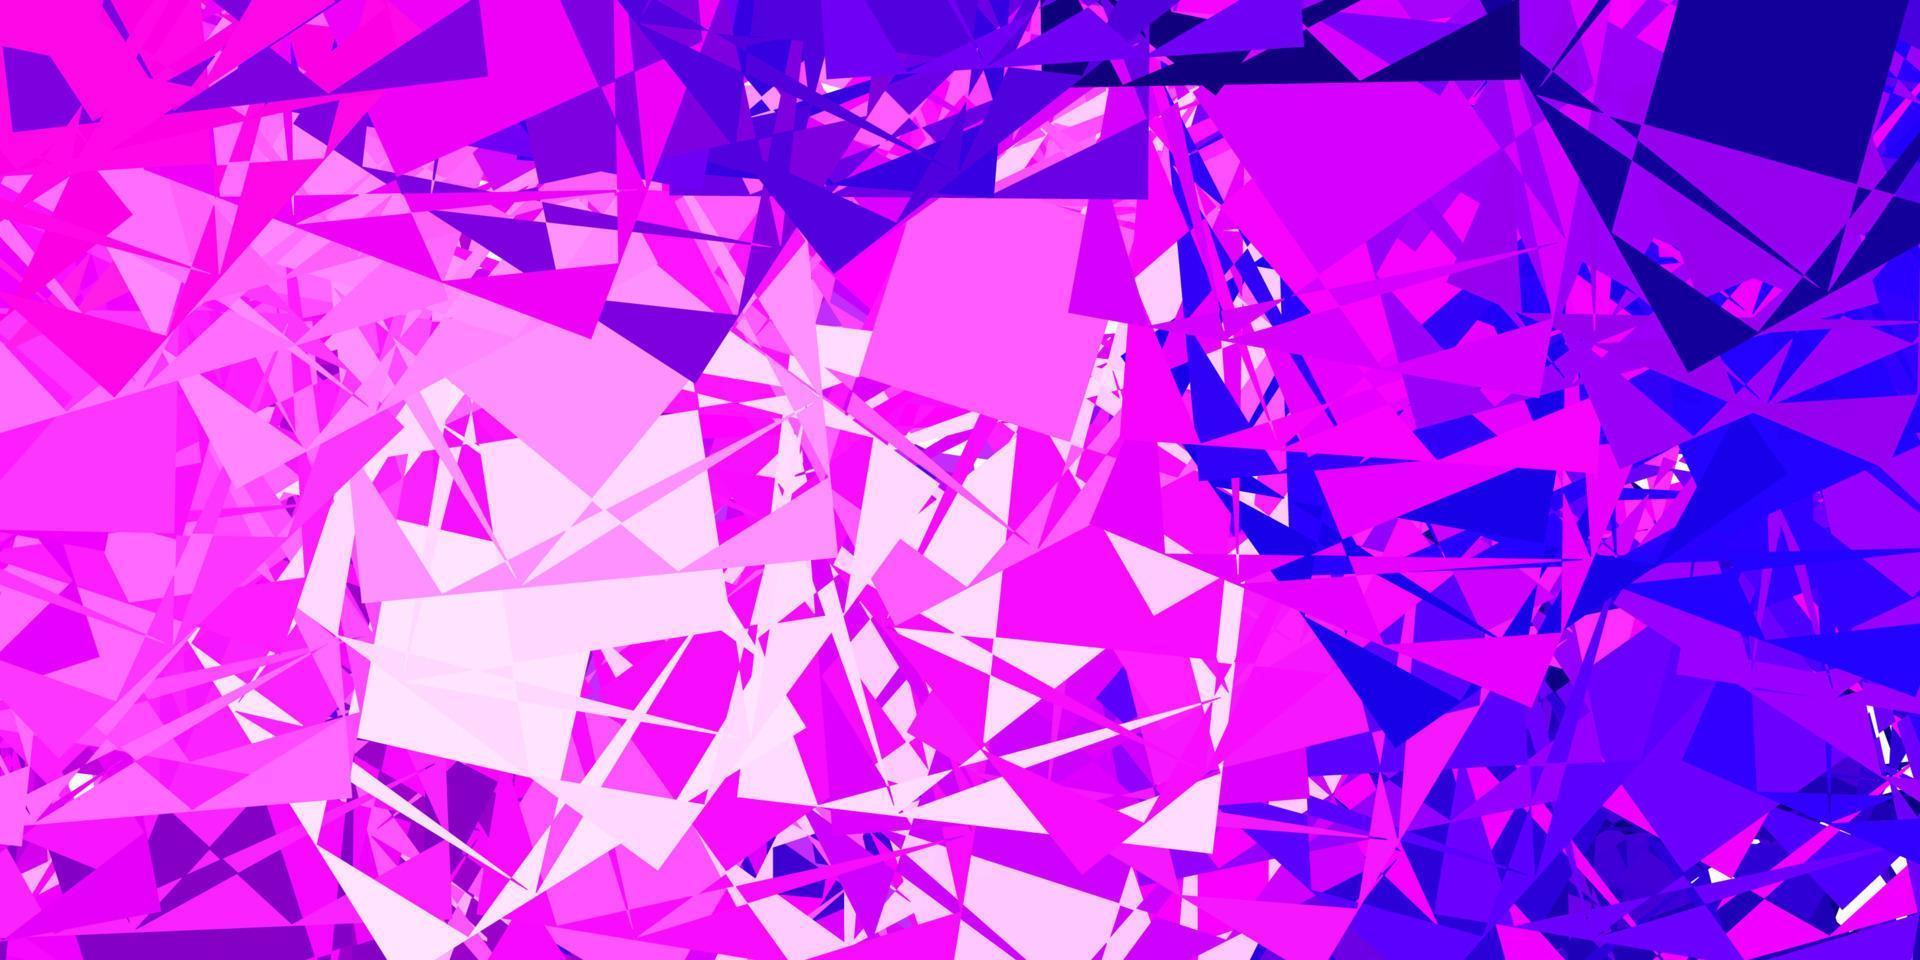 pano de fundo vector rosa claro roxo com formas caóticas.